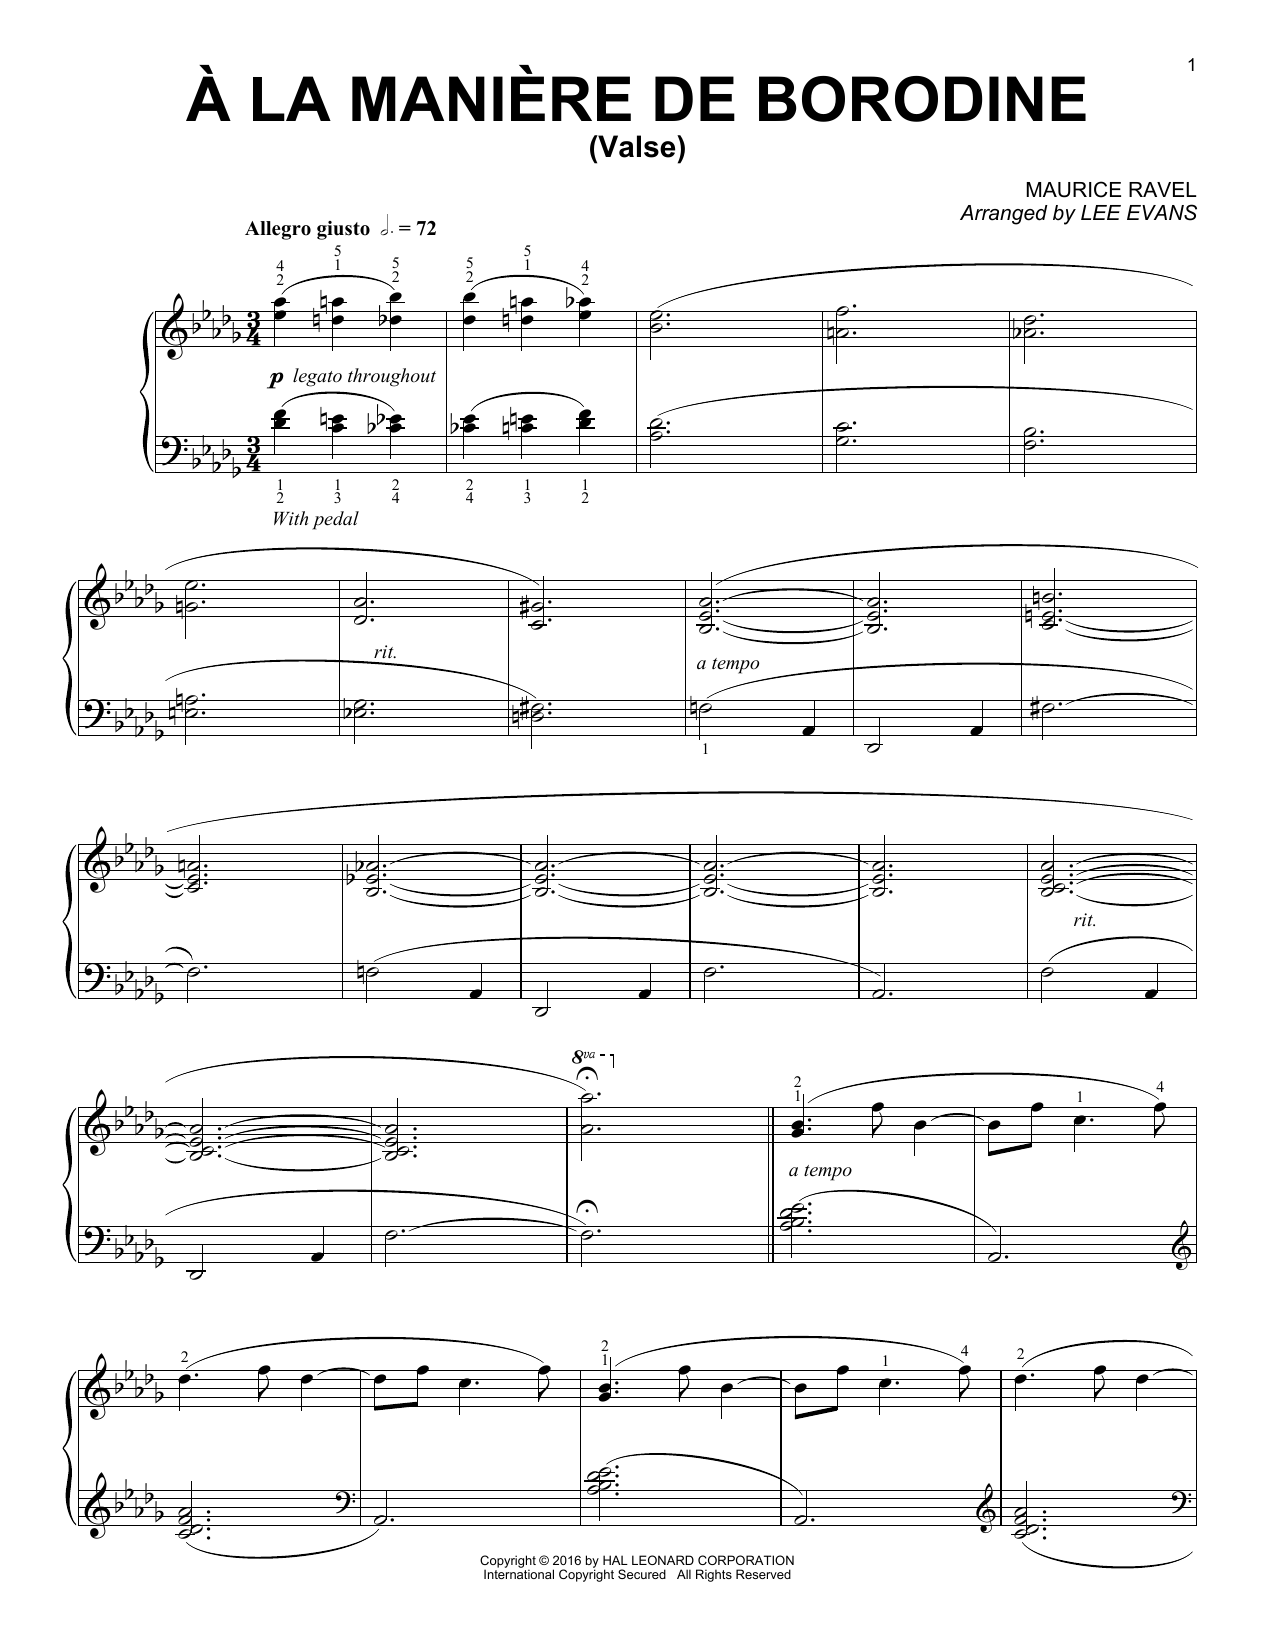 Lee Evans La Manire De Borodine (Valse) Sheet Music Notes & Chords for Piano - Download or Print PDF